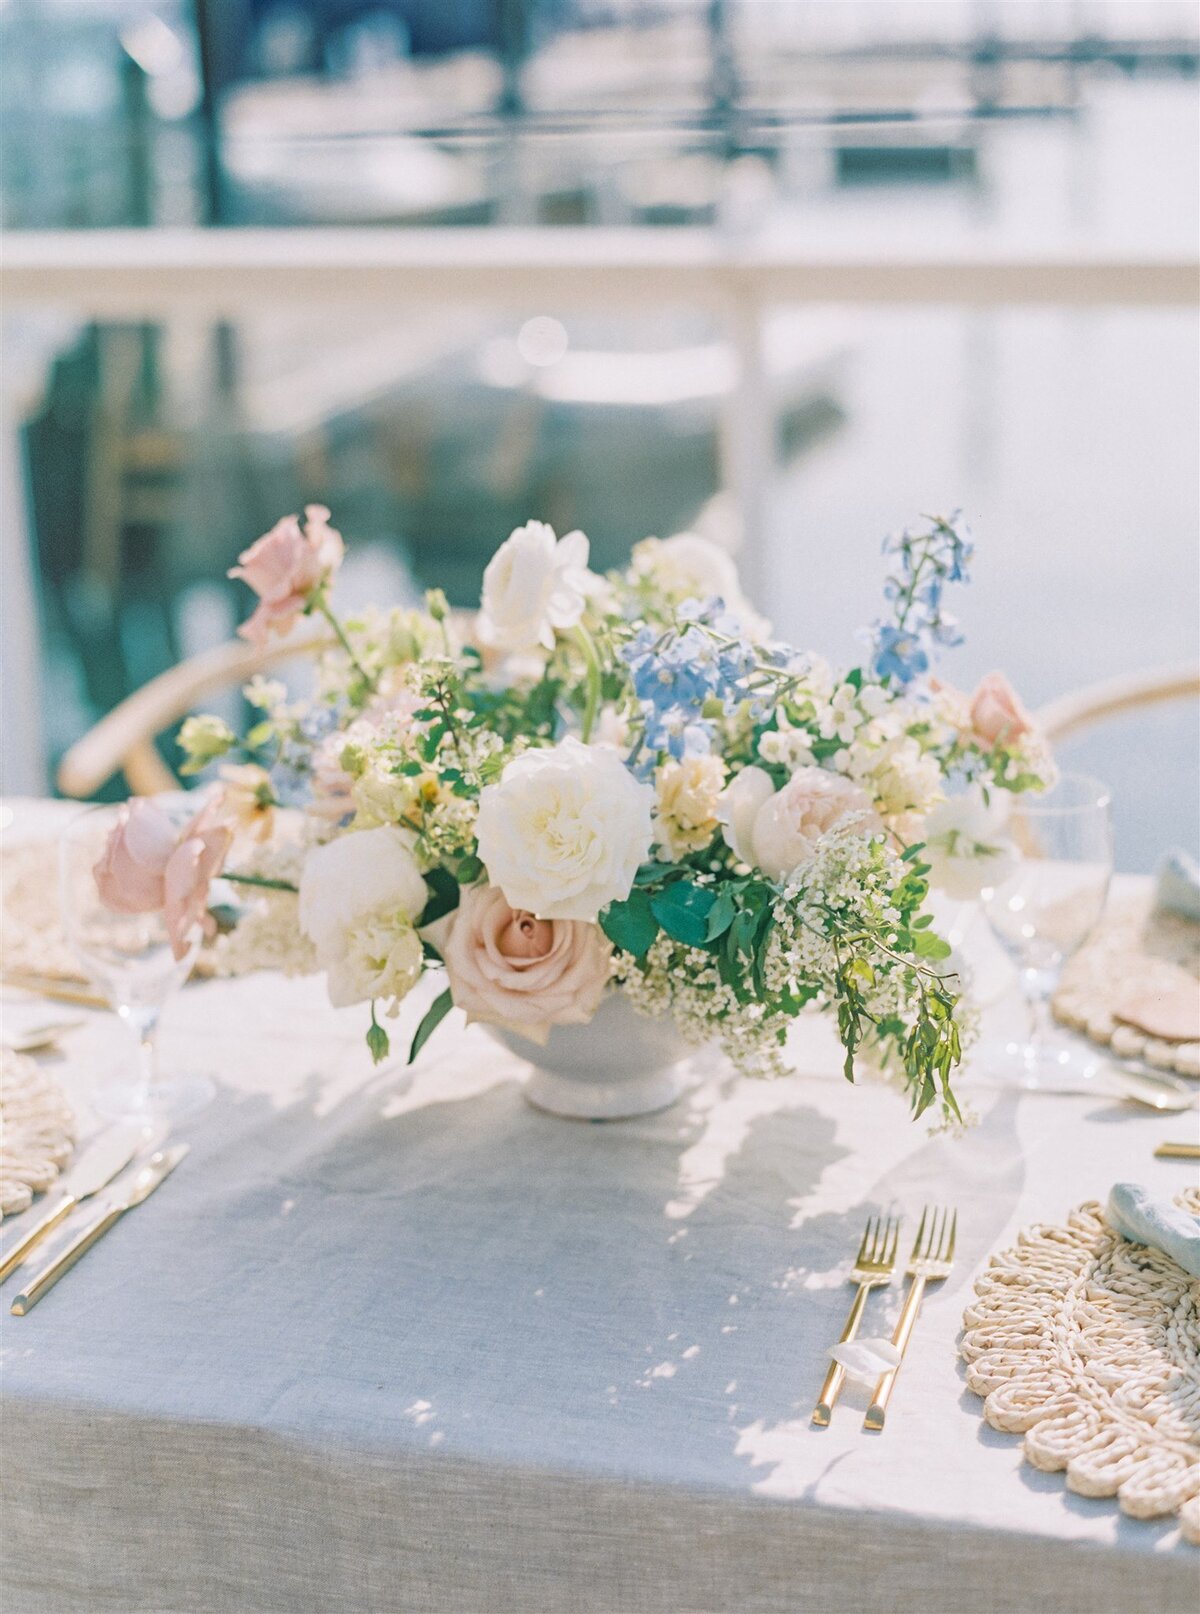 Kate-Murtaugh-Events-wedding-planner-Newport-intimate-outdoor-reception-spring-floral-centerpieces